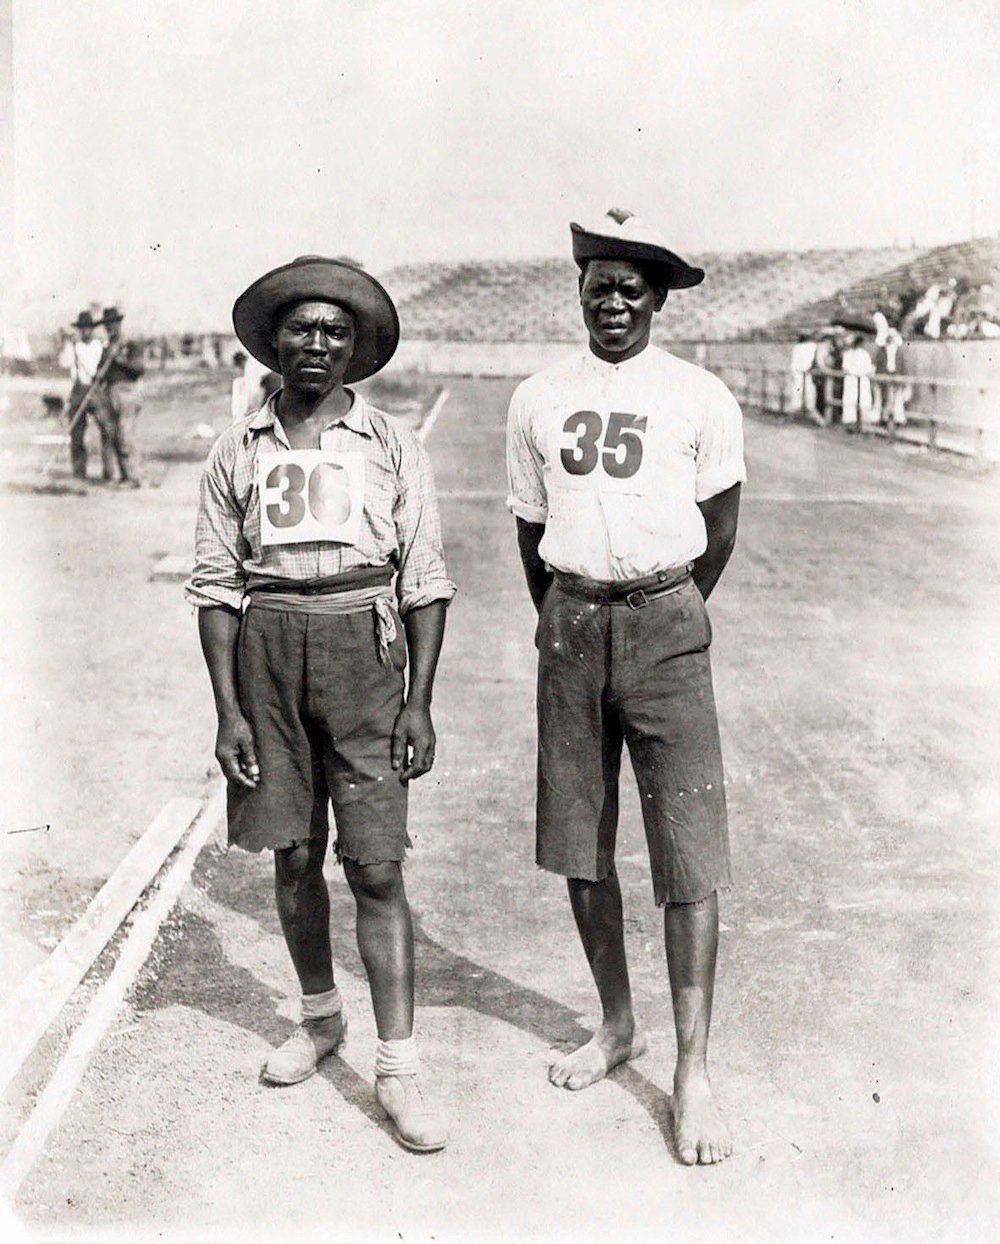 Len Taunyane and Jan Mashiane took part in the 1904 Olympic marathon